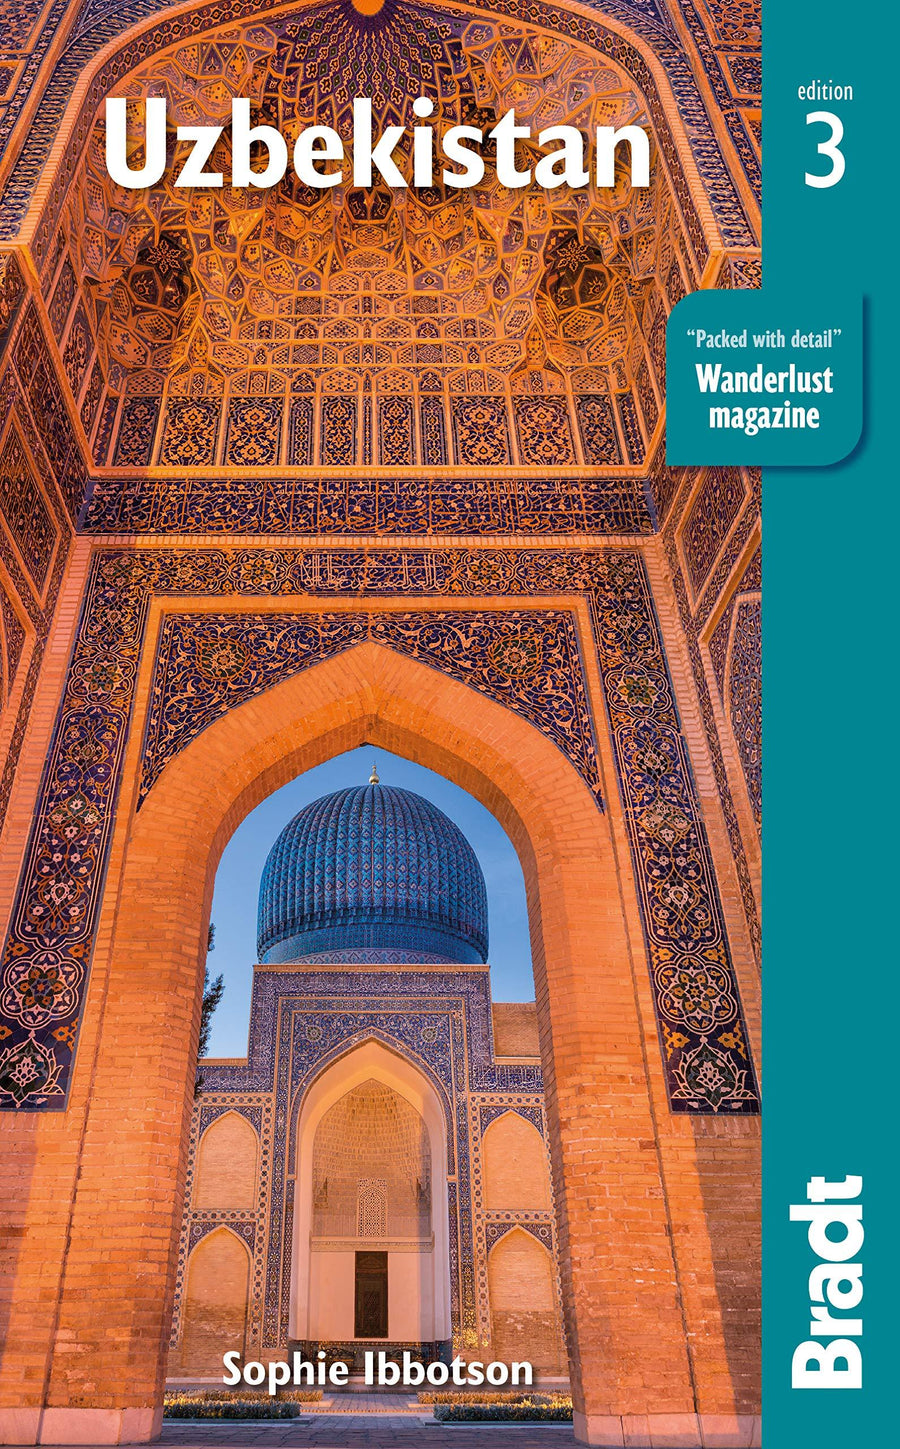 Guide de voyage (en anglais) - Uzbekistan | Bradt guide de voyage Bradt 